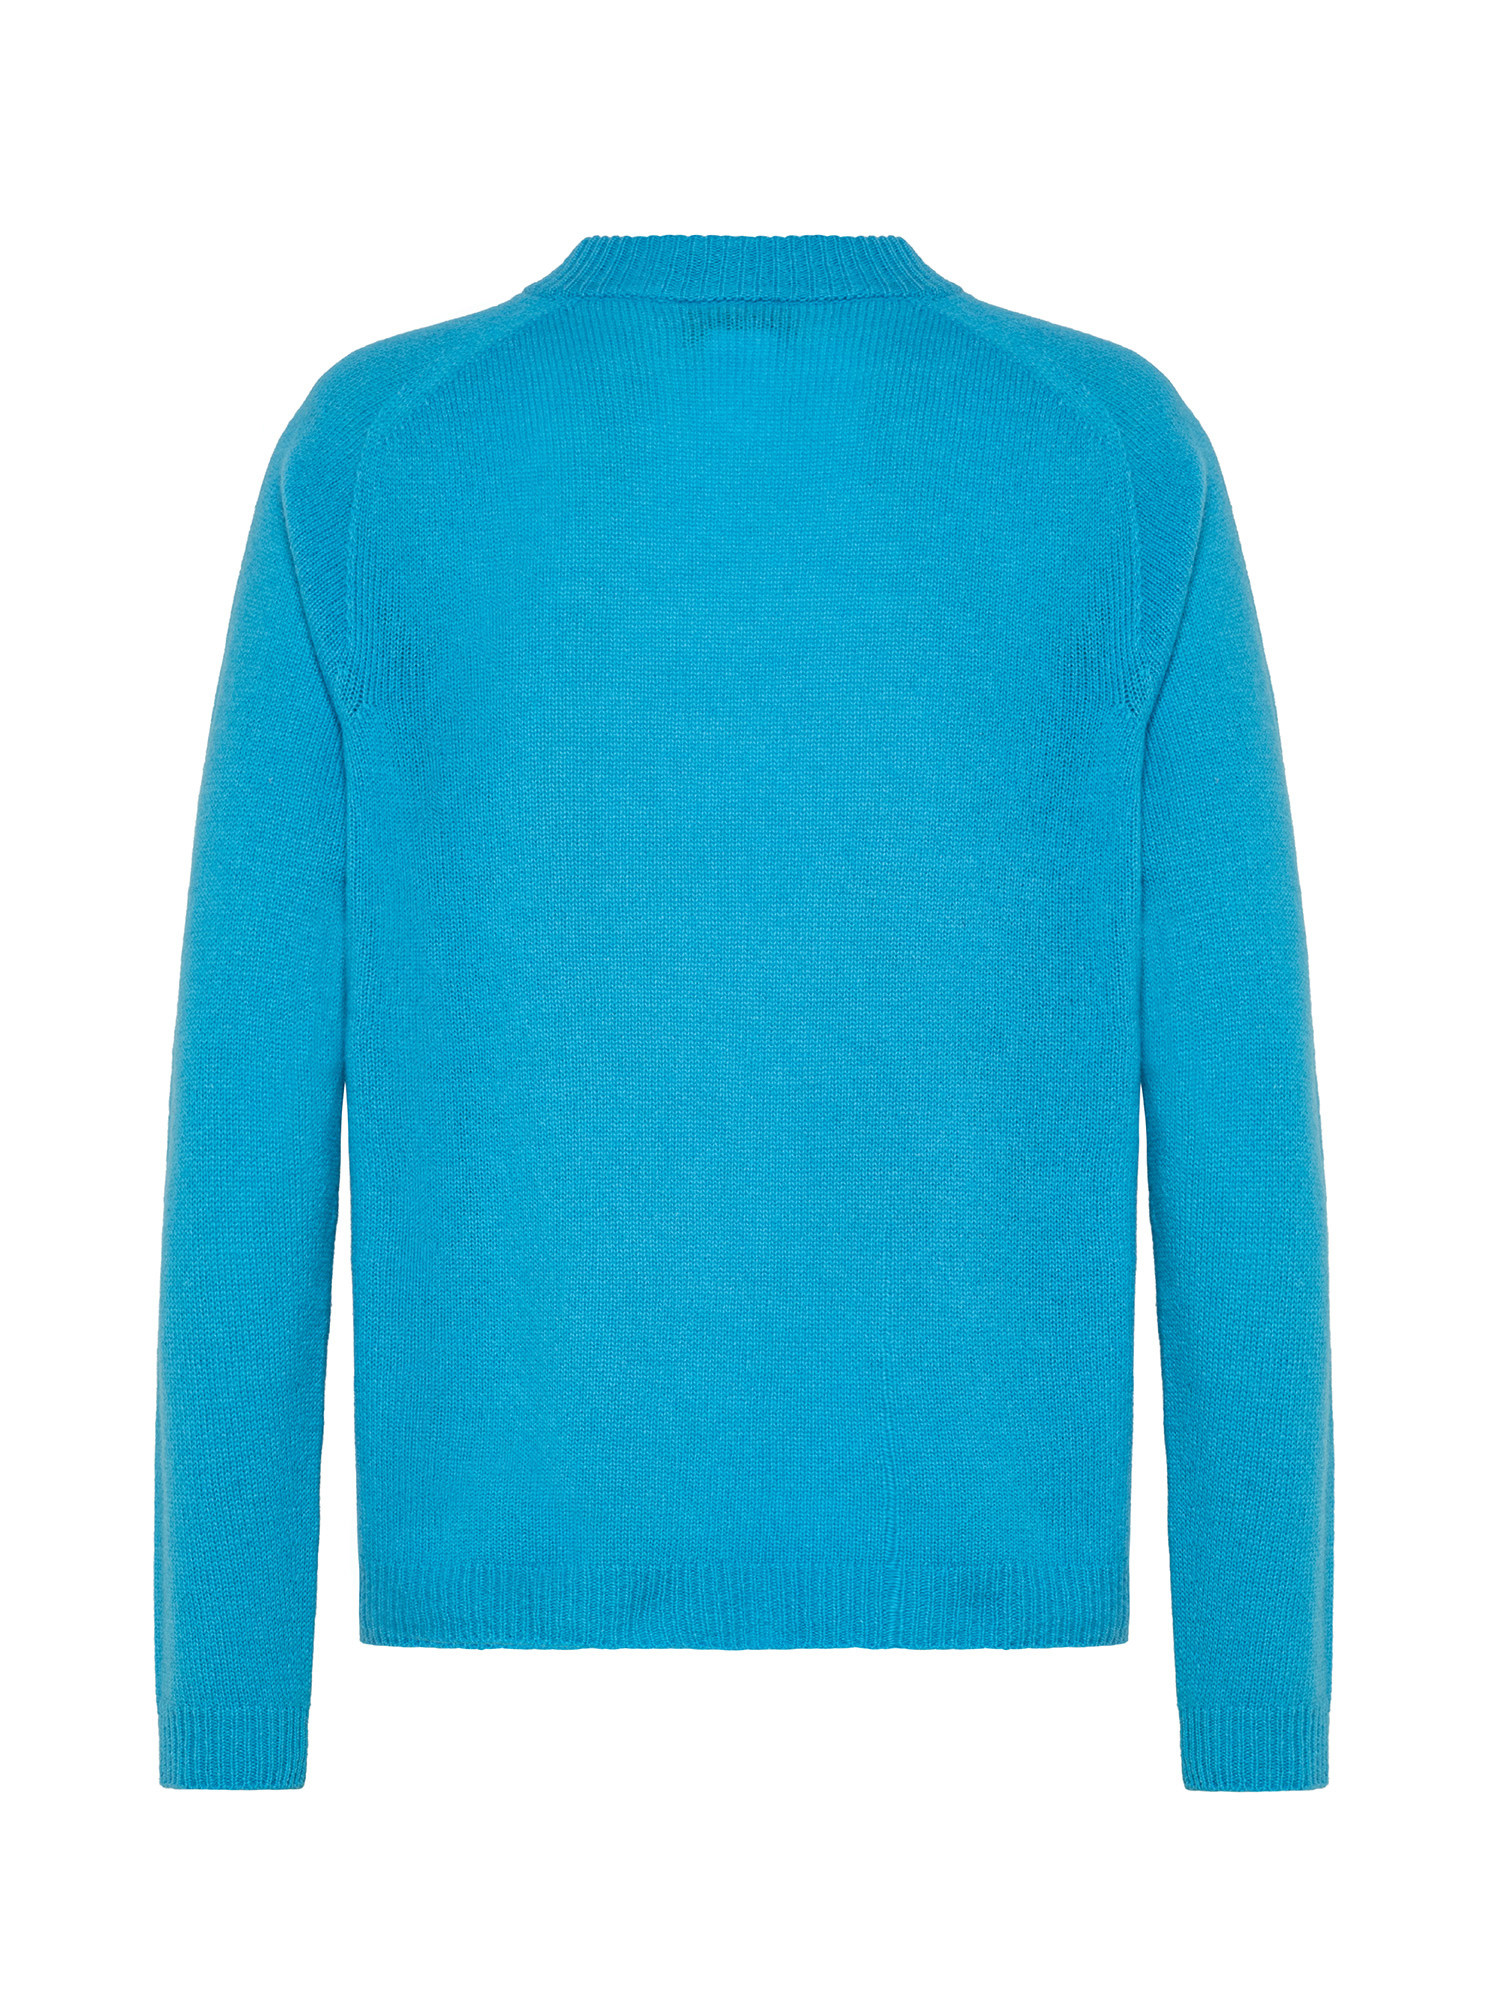 K Collection - Crewneck sweater, Light Blue, large image number 1